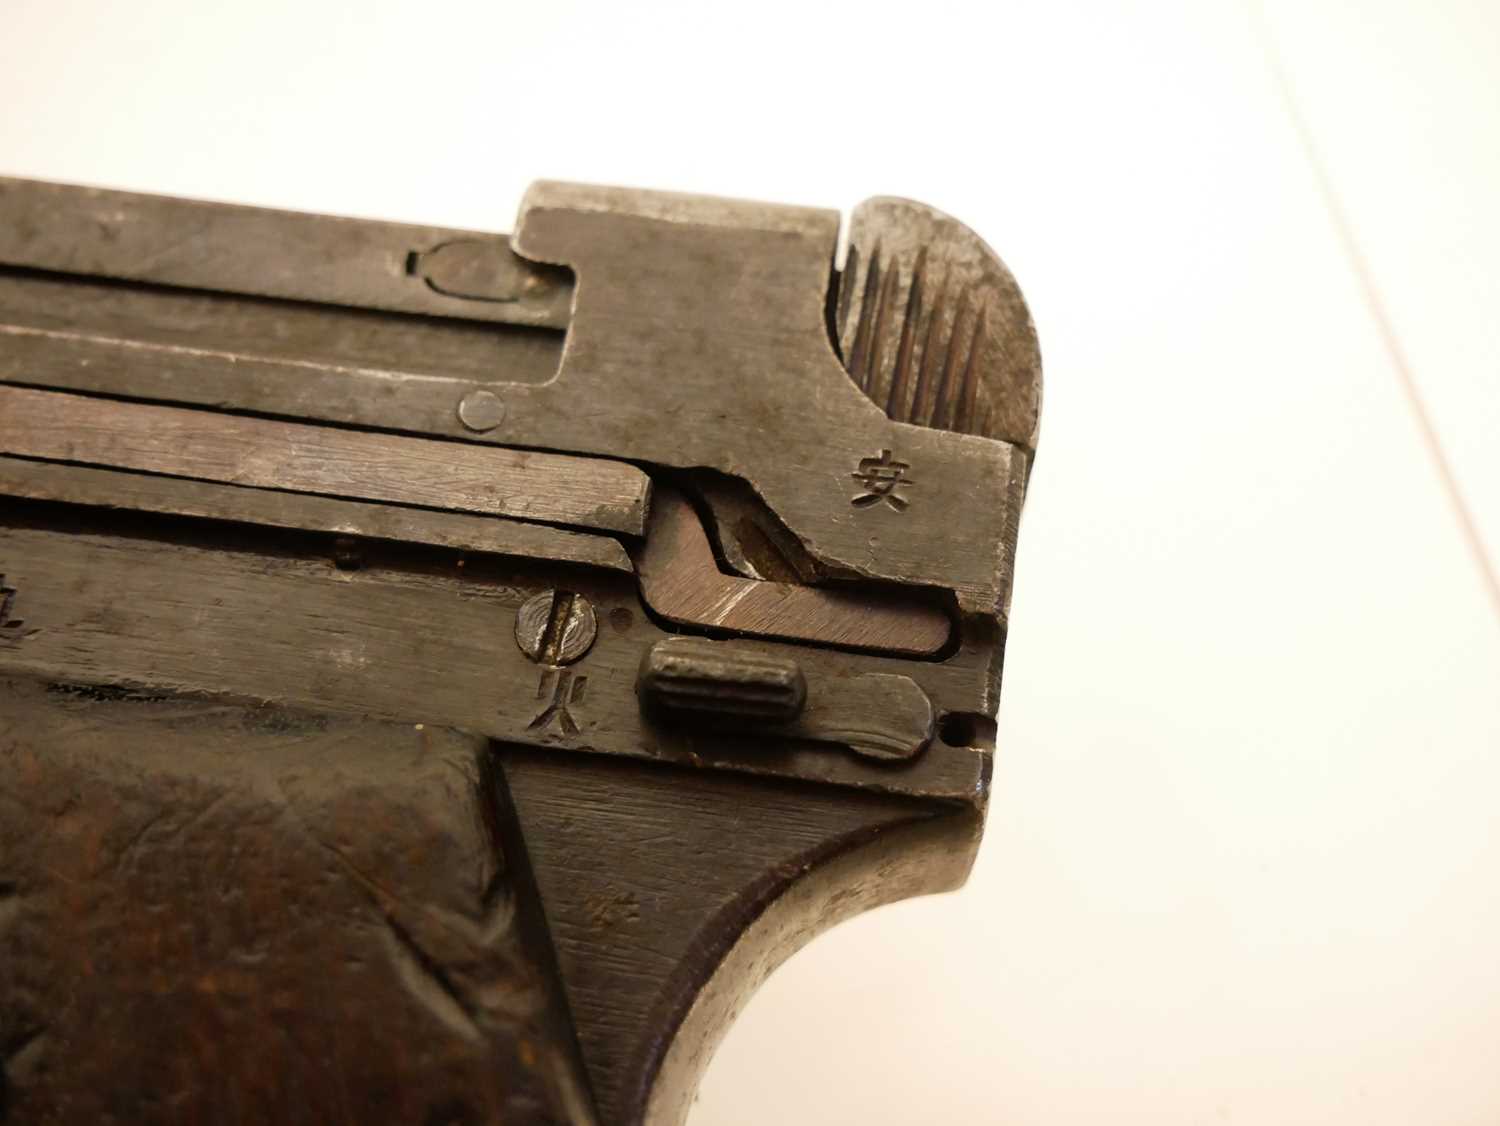 Deactivated Nambu 8mm semi automatic pistol 63615 - Image 7 of 10